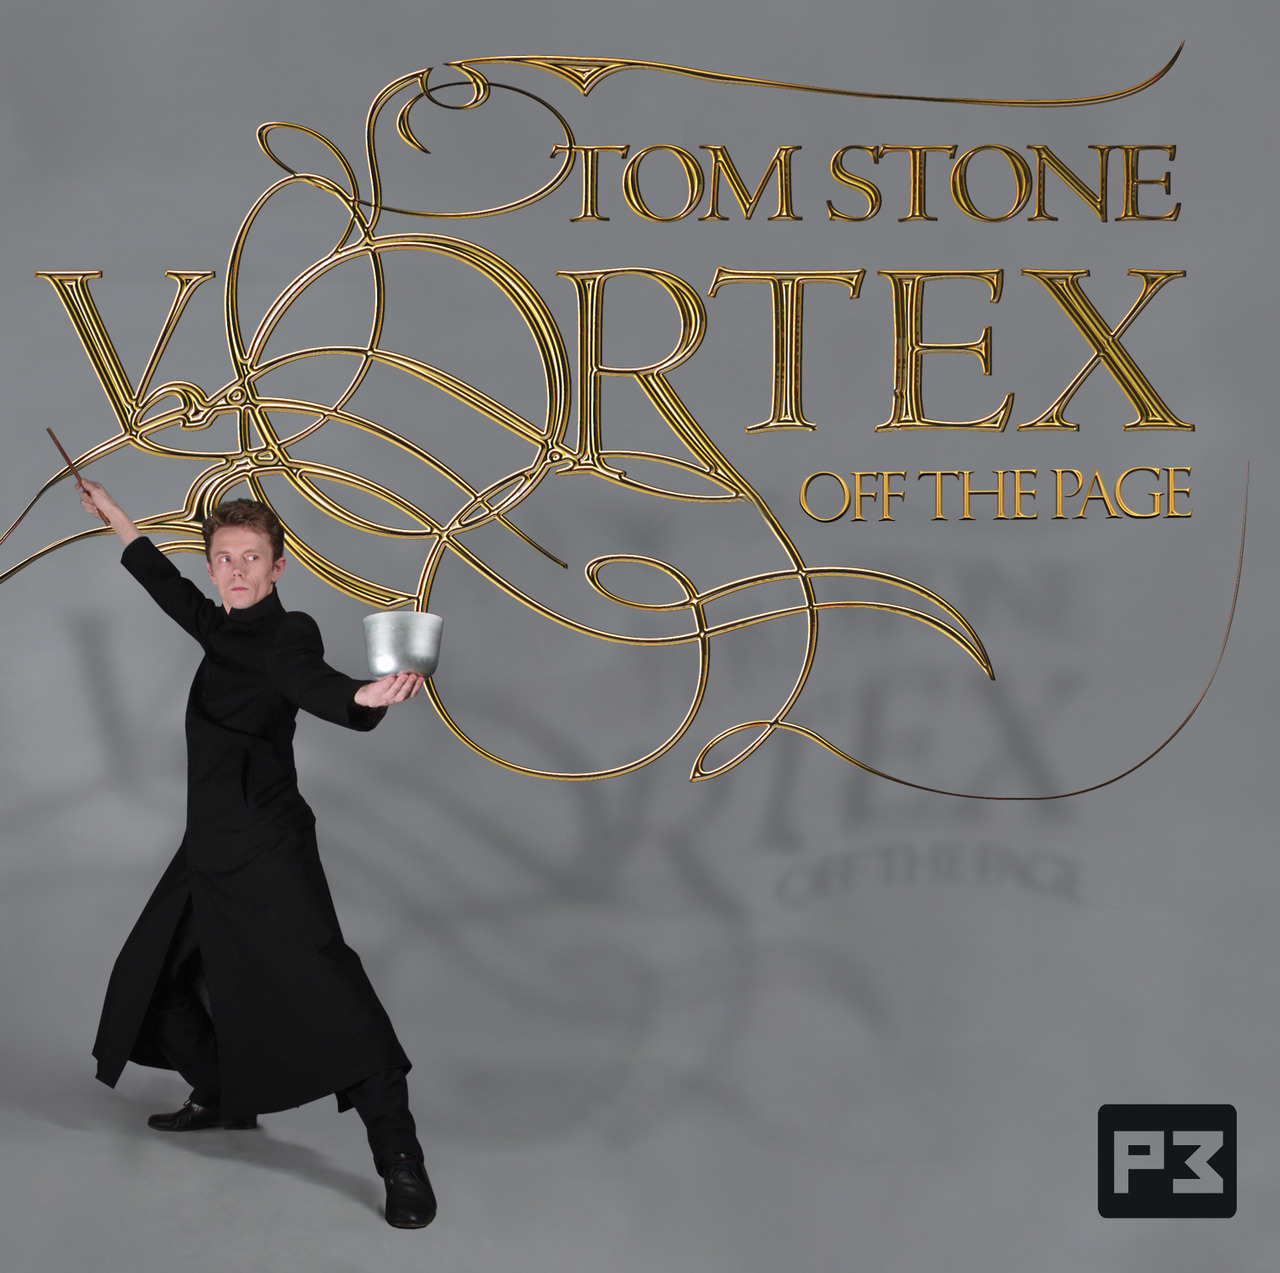 Tom Stone - Vortex Off the Page